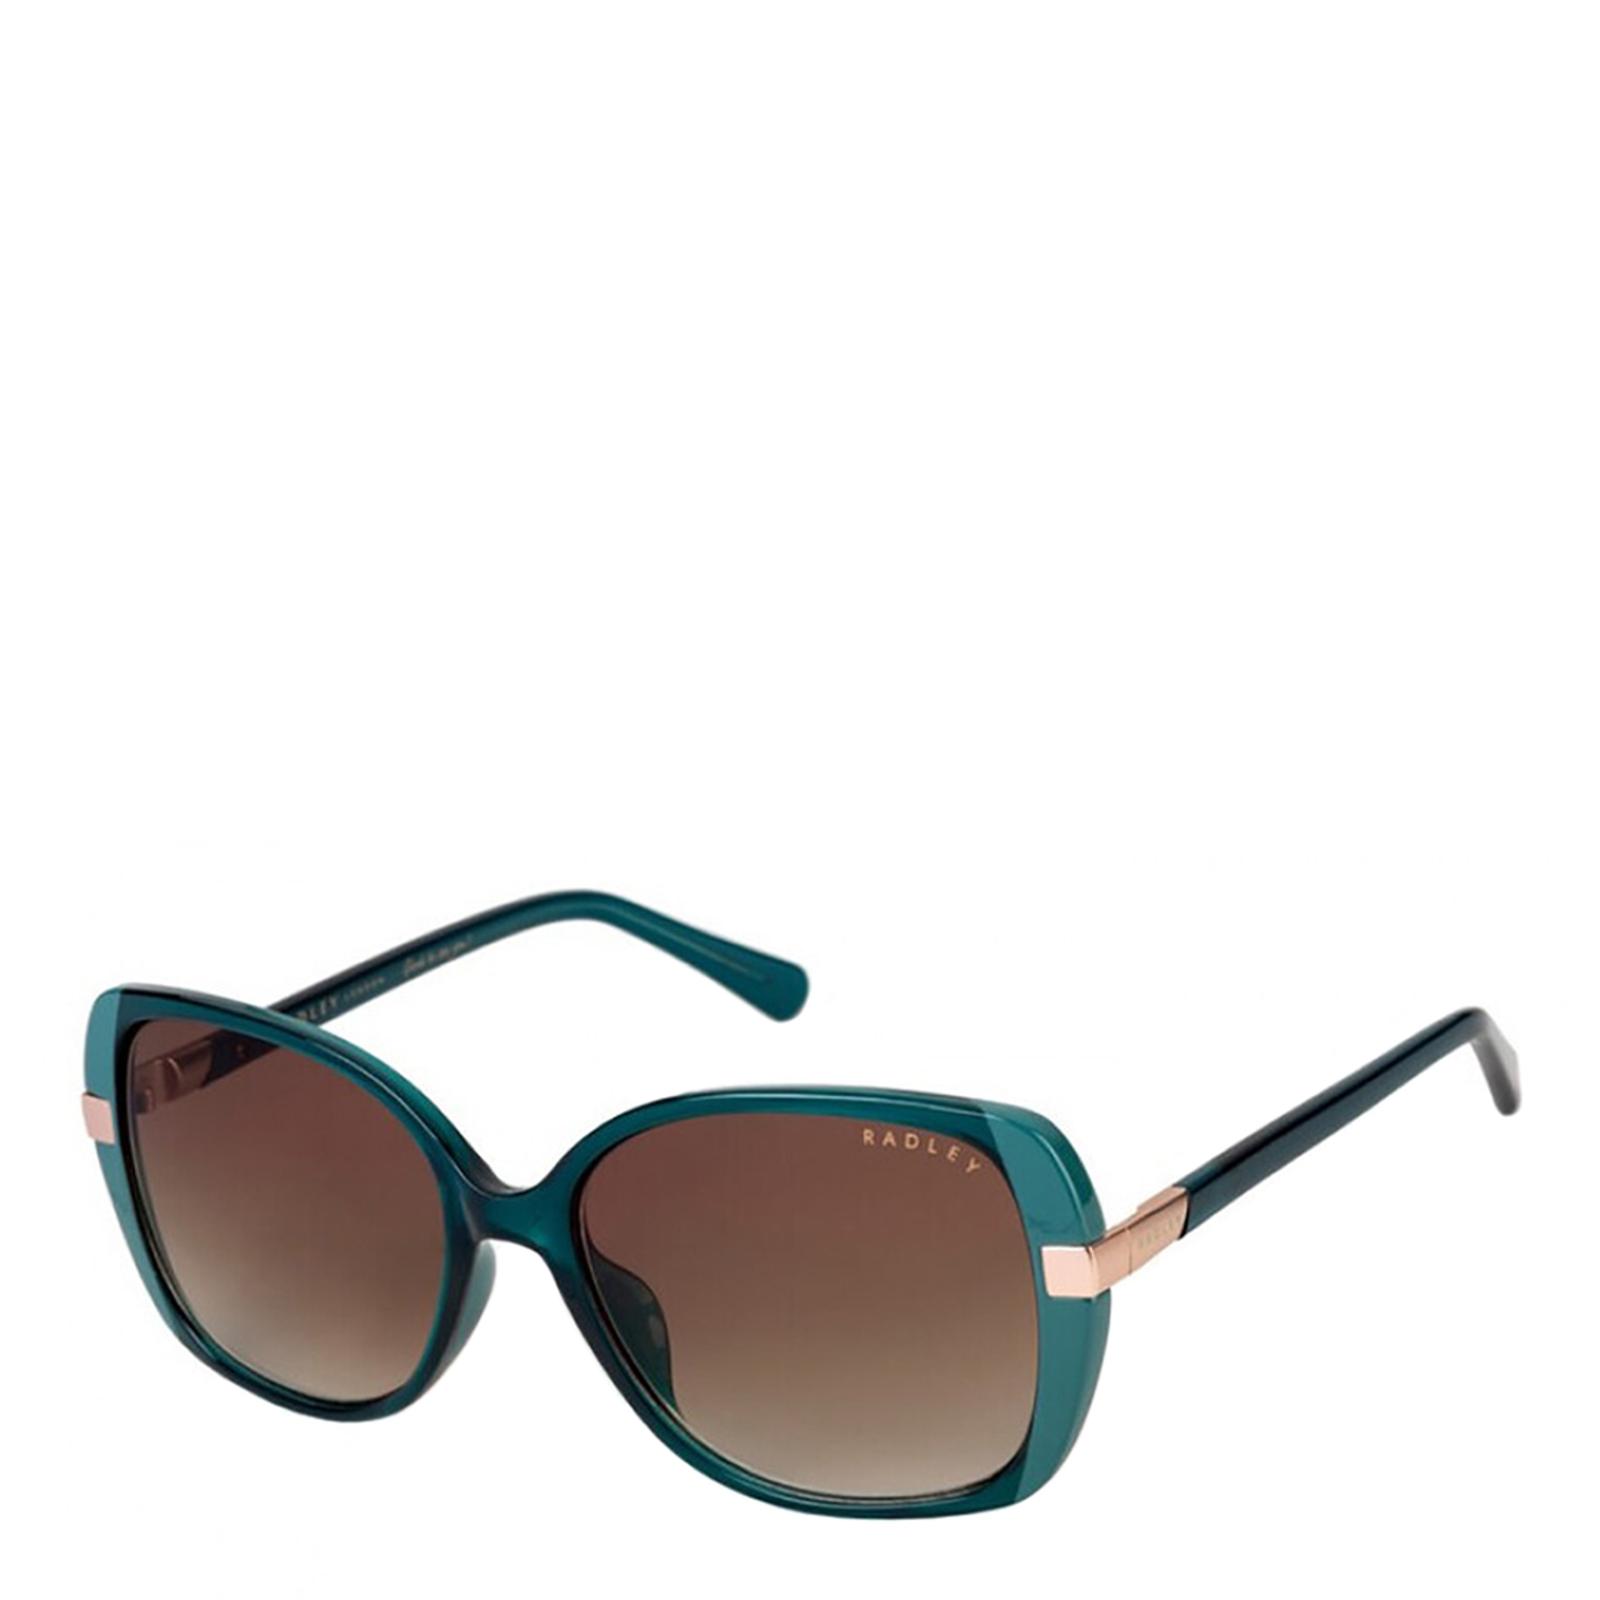 Women's Brown & Green Radley Sunglasses - BrandAlley